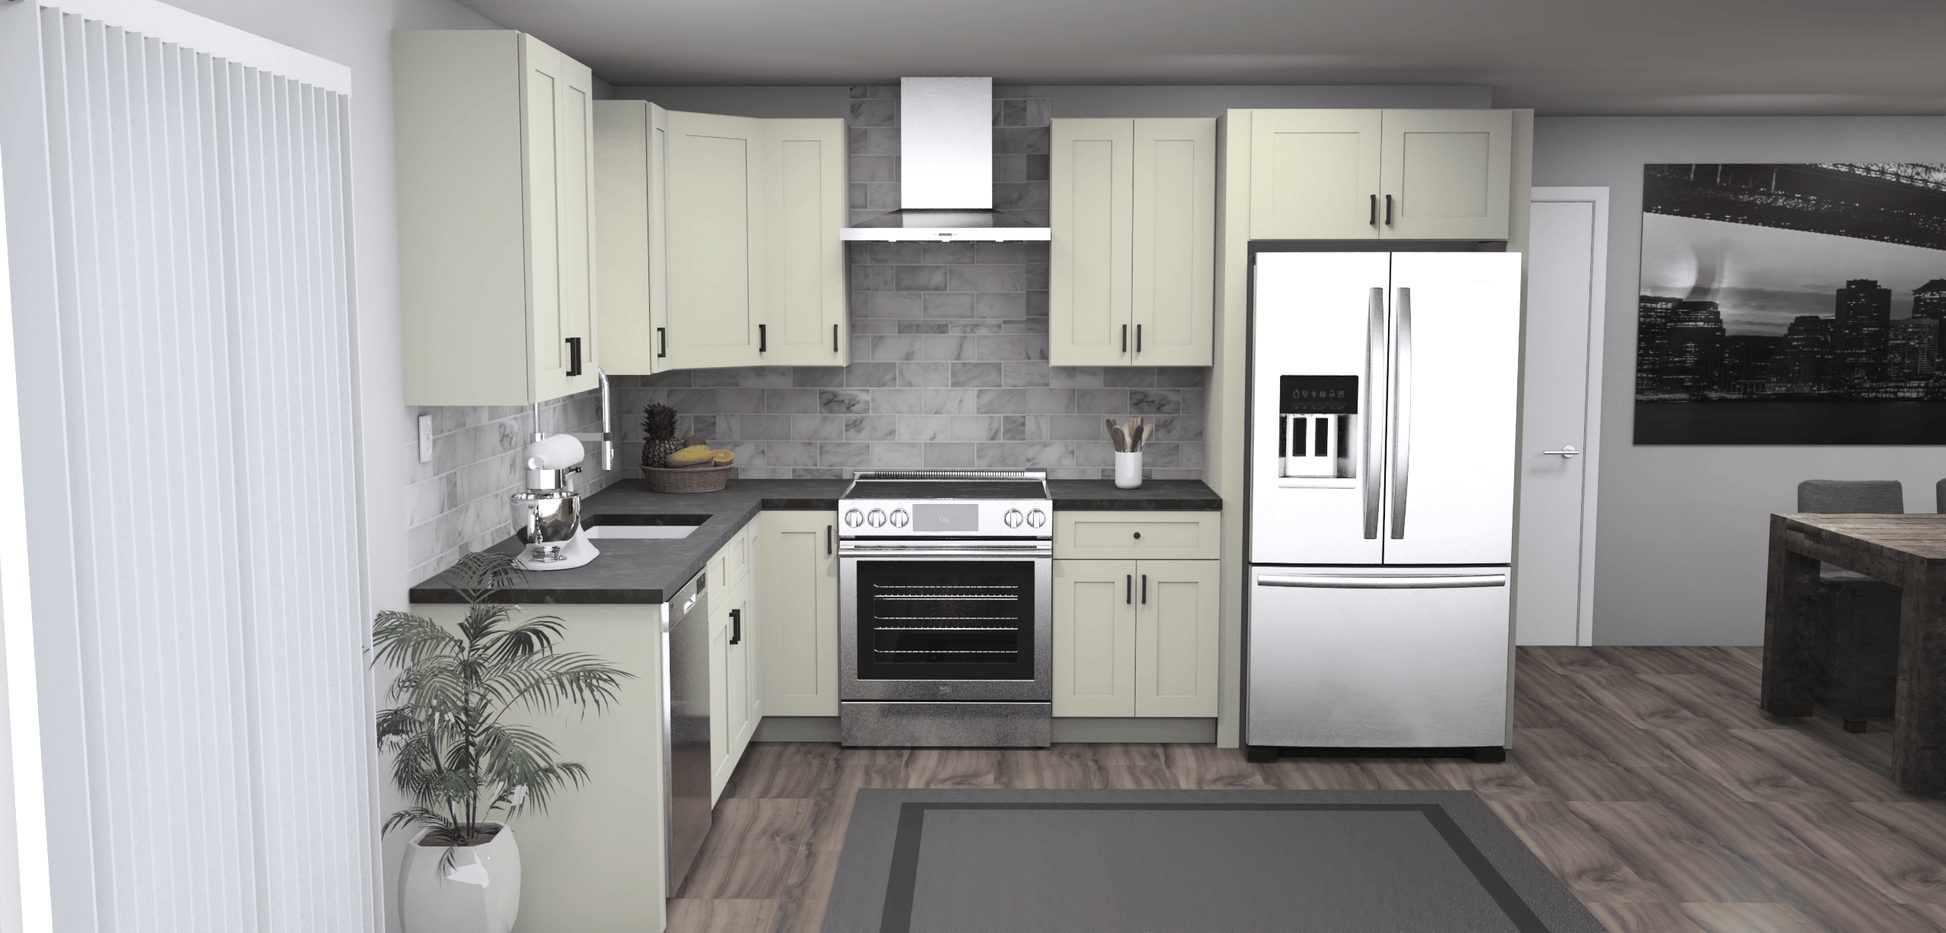 Fabuwood Allure Galaxy Linen 8 x 11 L Shaped Kitchen Front Layout Photo